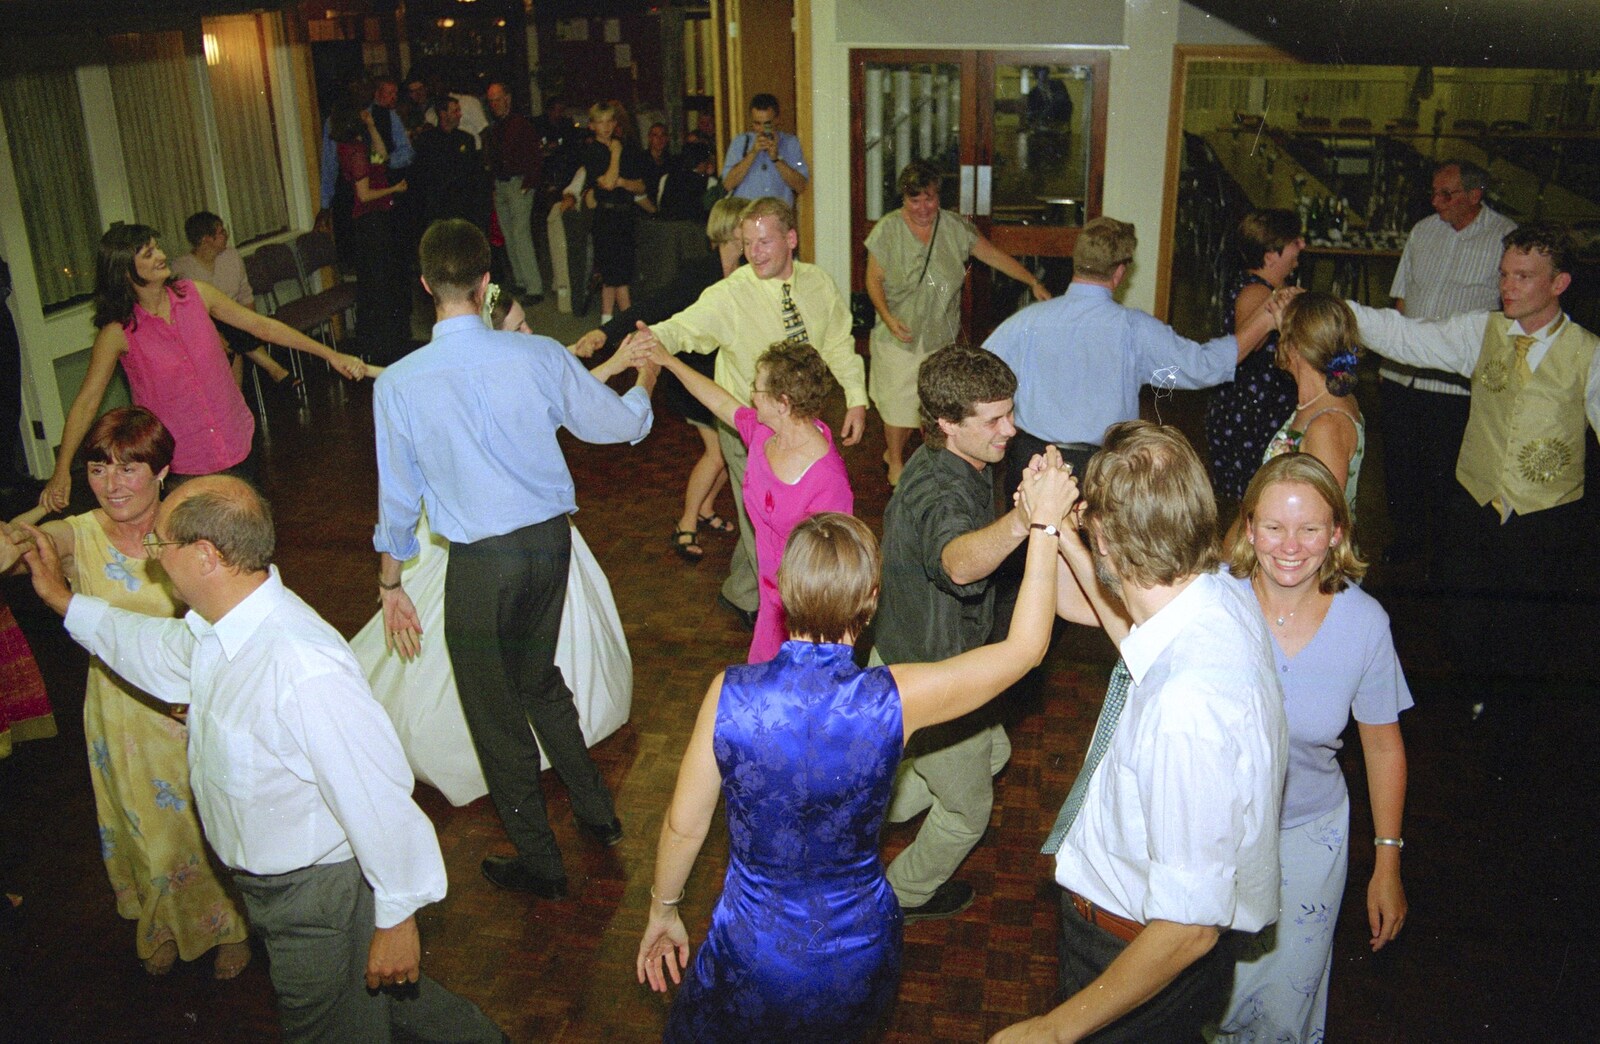 Ceilidh dancing in full effect from Joe and Lesley's CISU Wedding, Ipswich, Suffolk - 30th July 1998